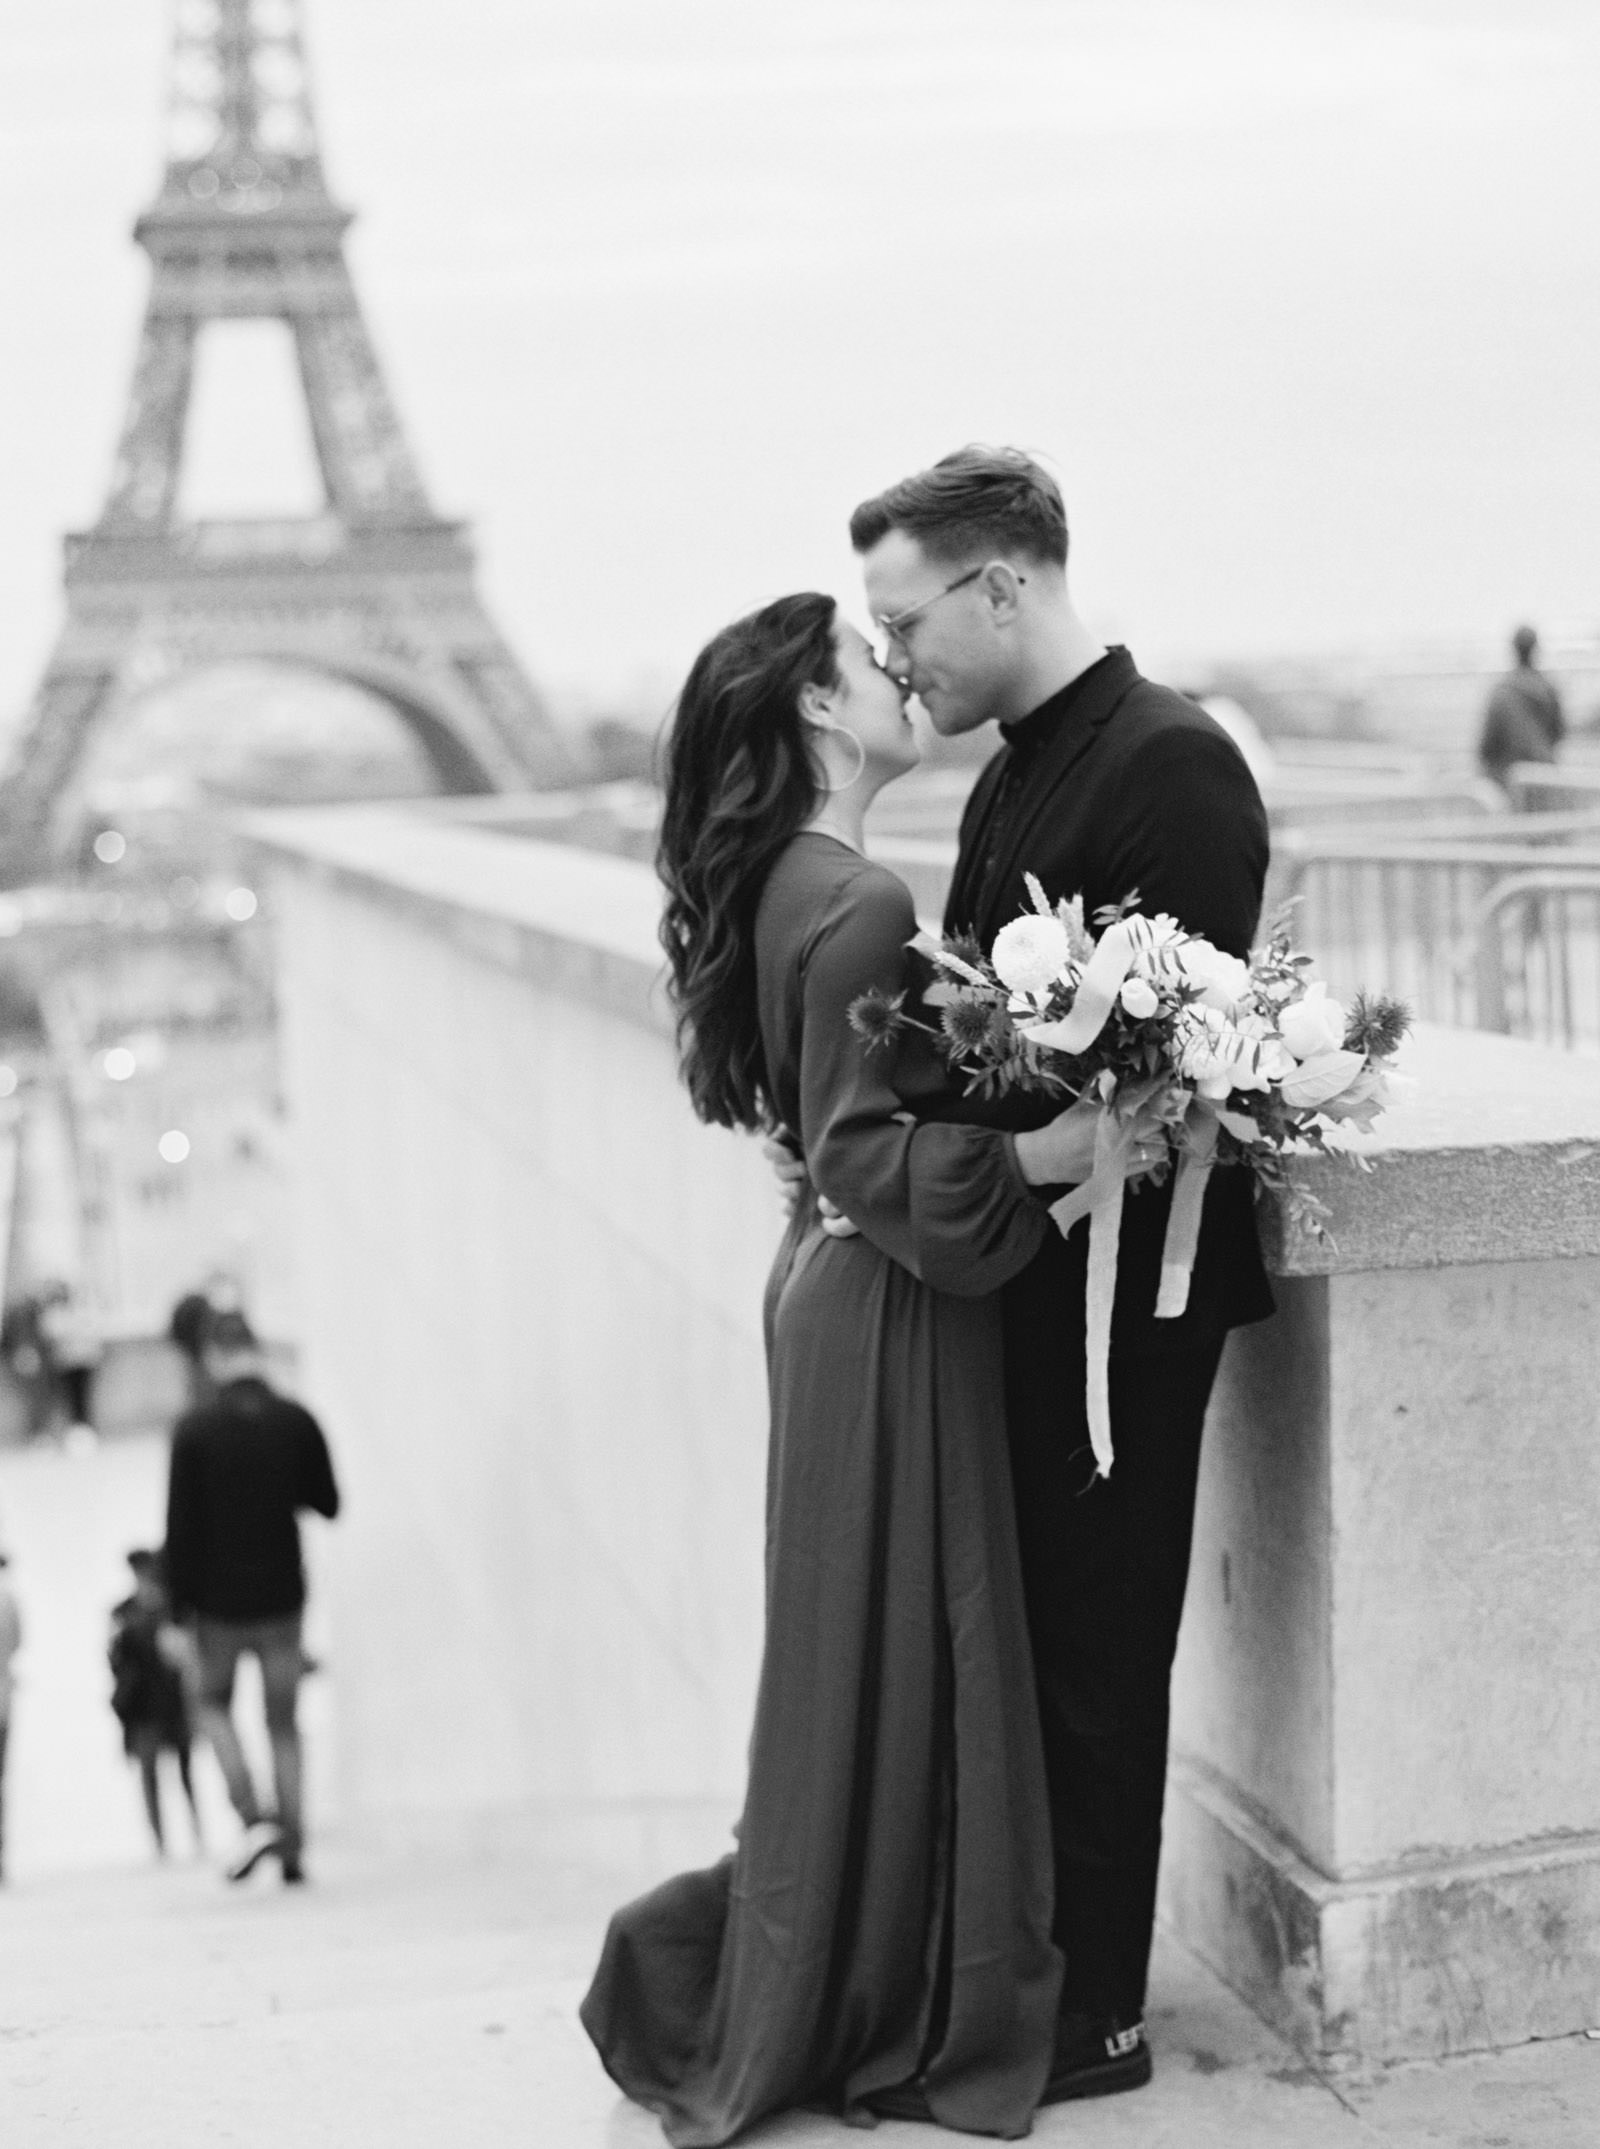 Romantic Eiffel Tower Engagement Photos - KR Moreno